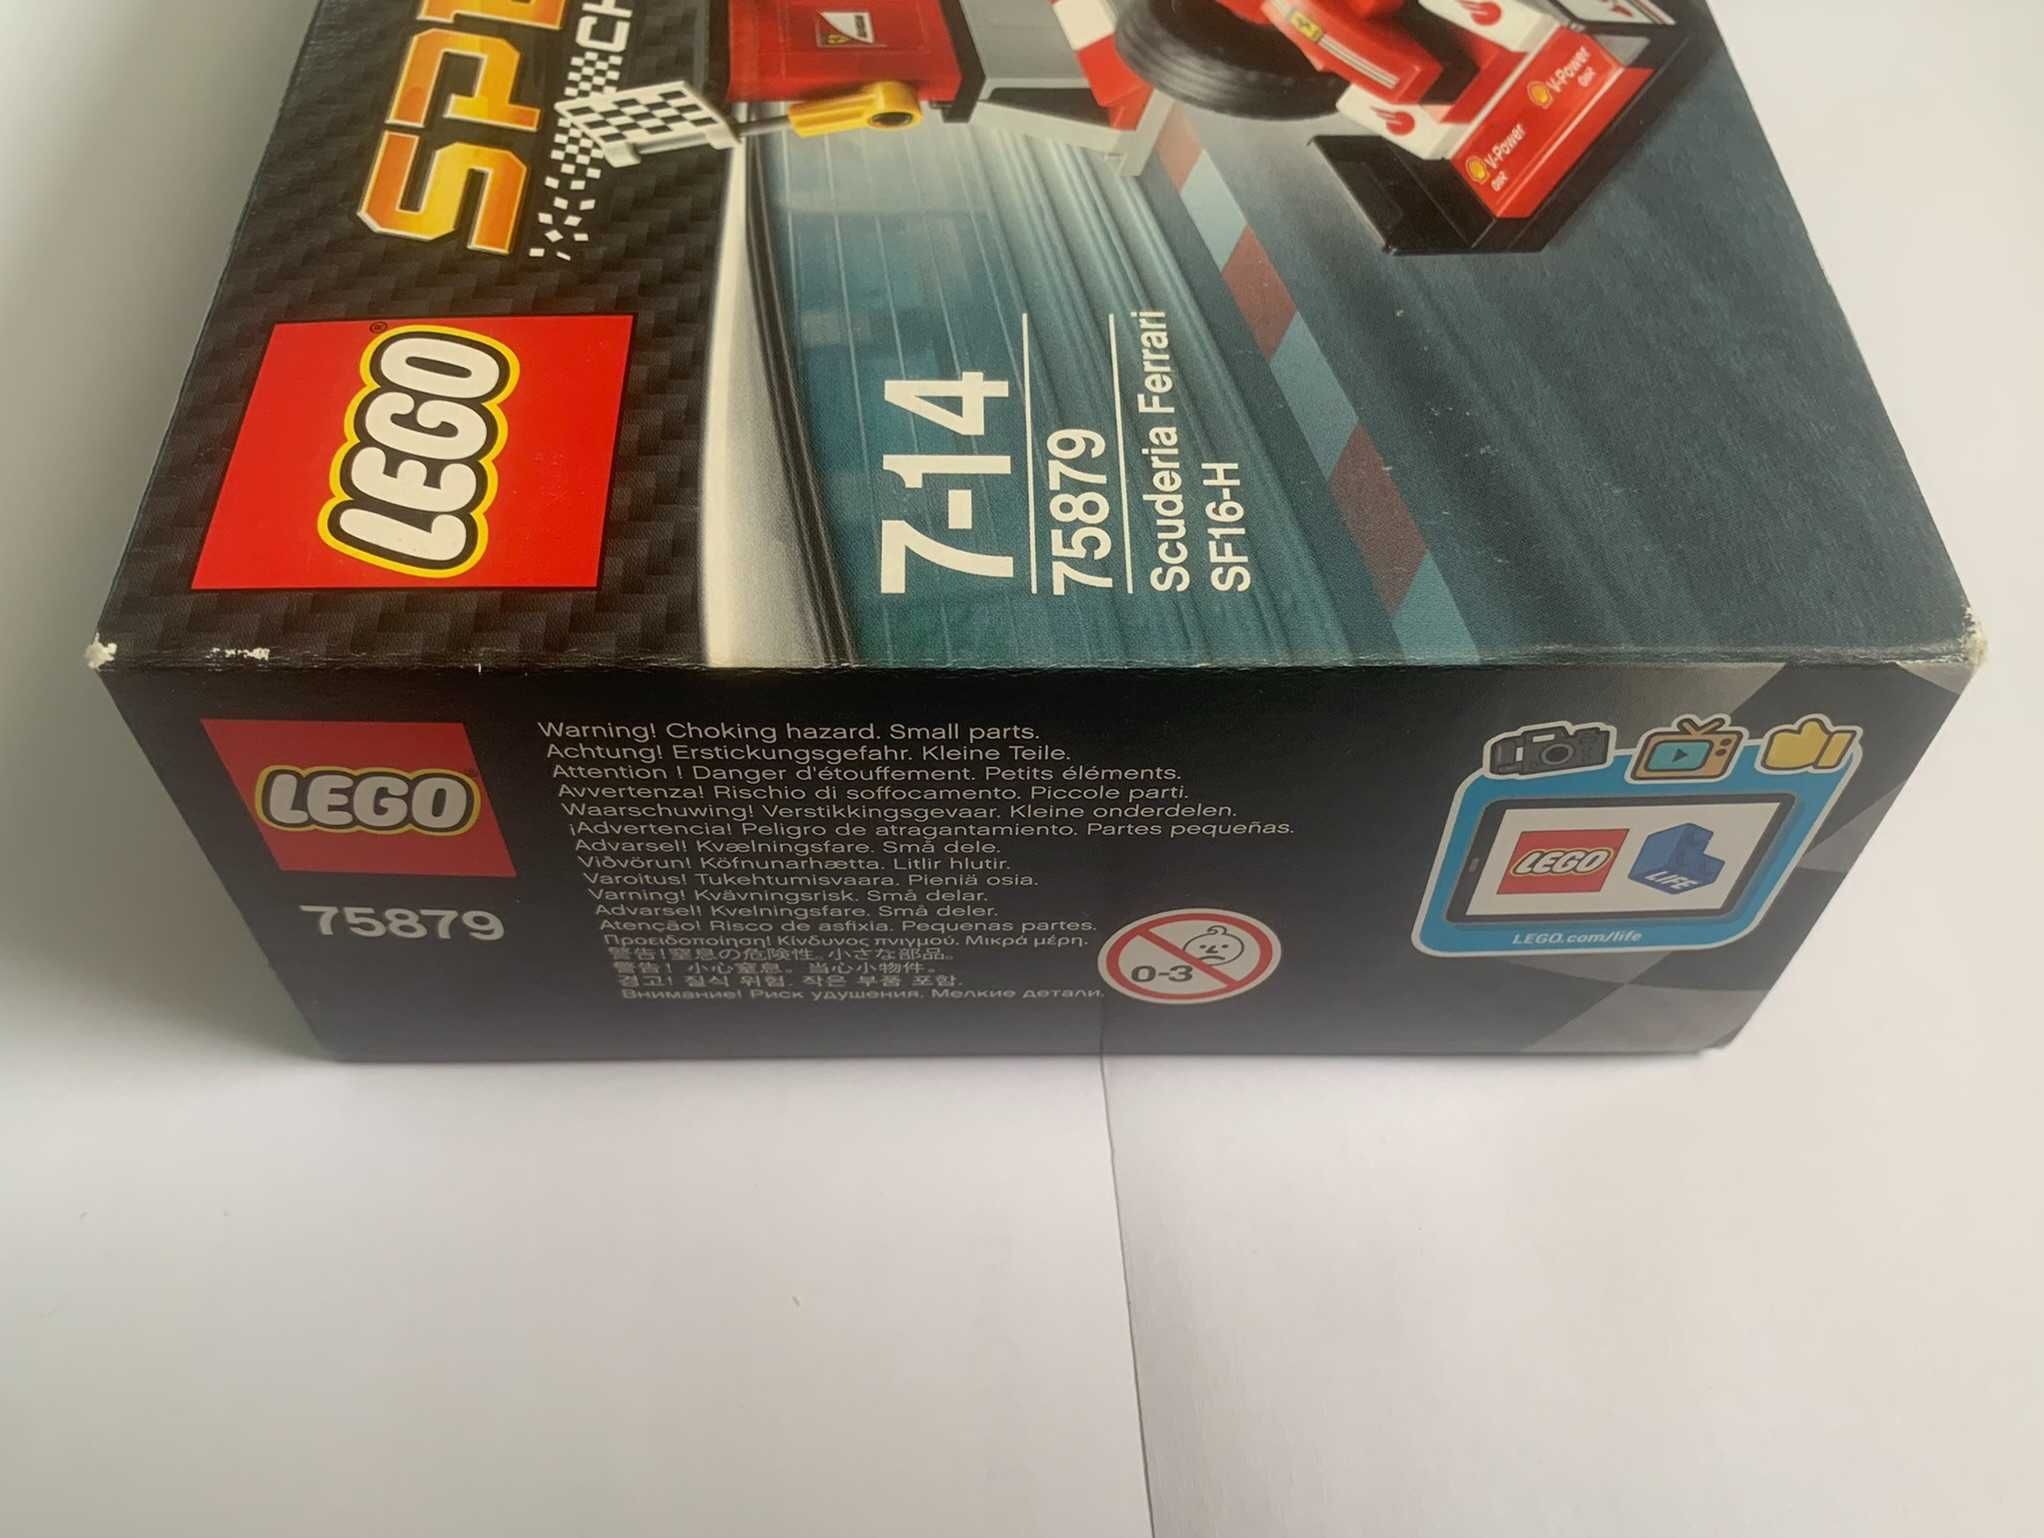 Lego 75879 Speed Champions Scuderia Ferrari SF16-H NOWE